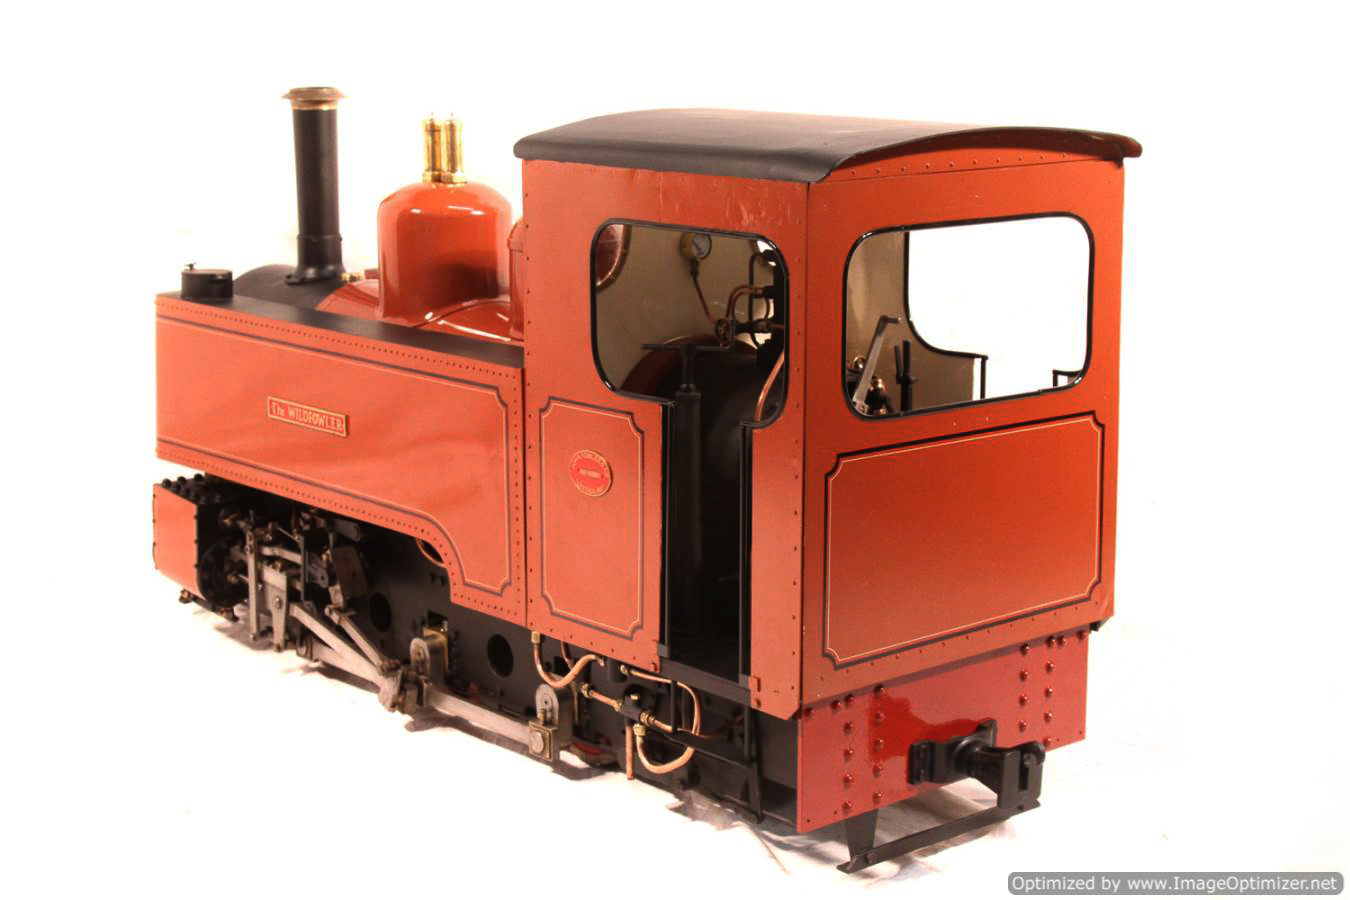 test 5 inch Gauge Fowler Live Steam Locomotive for sale 17 Optimized